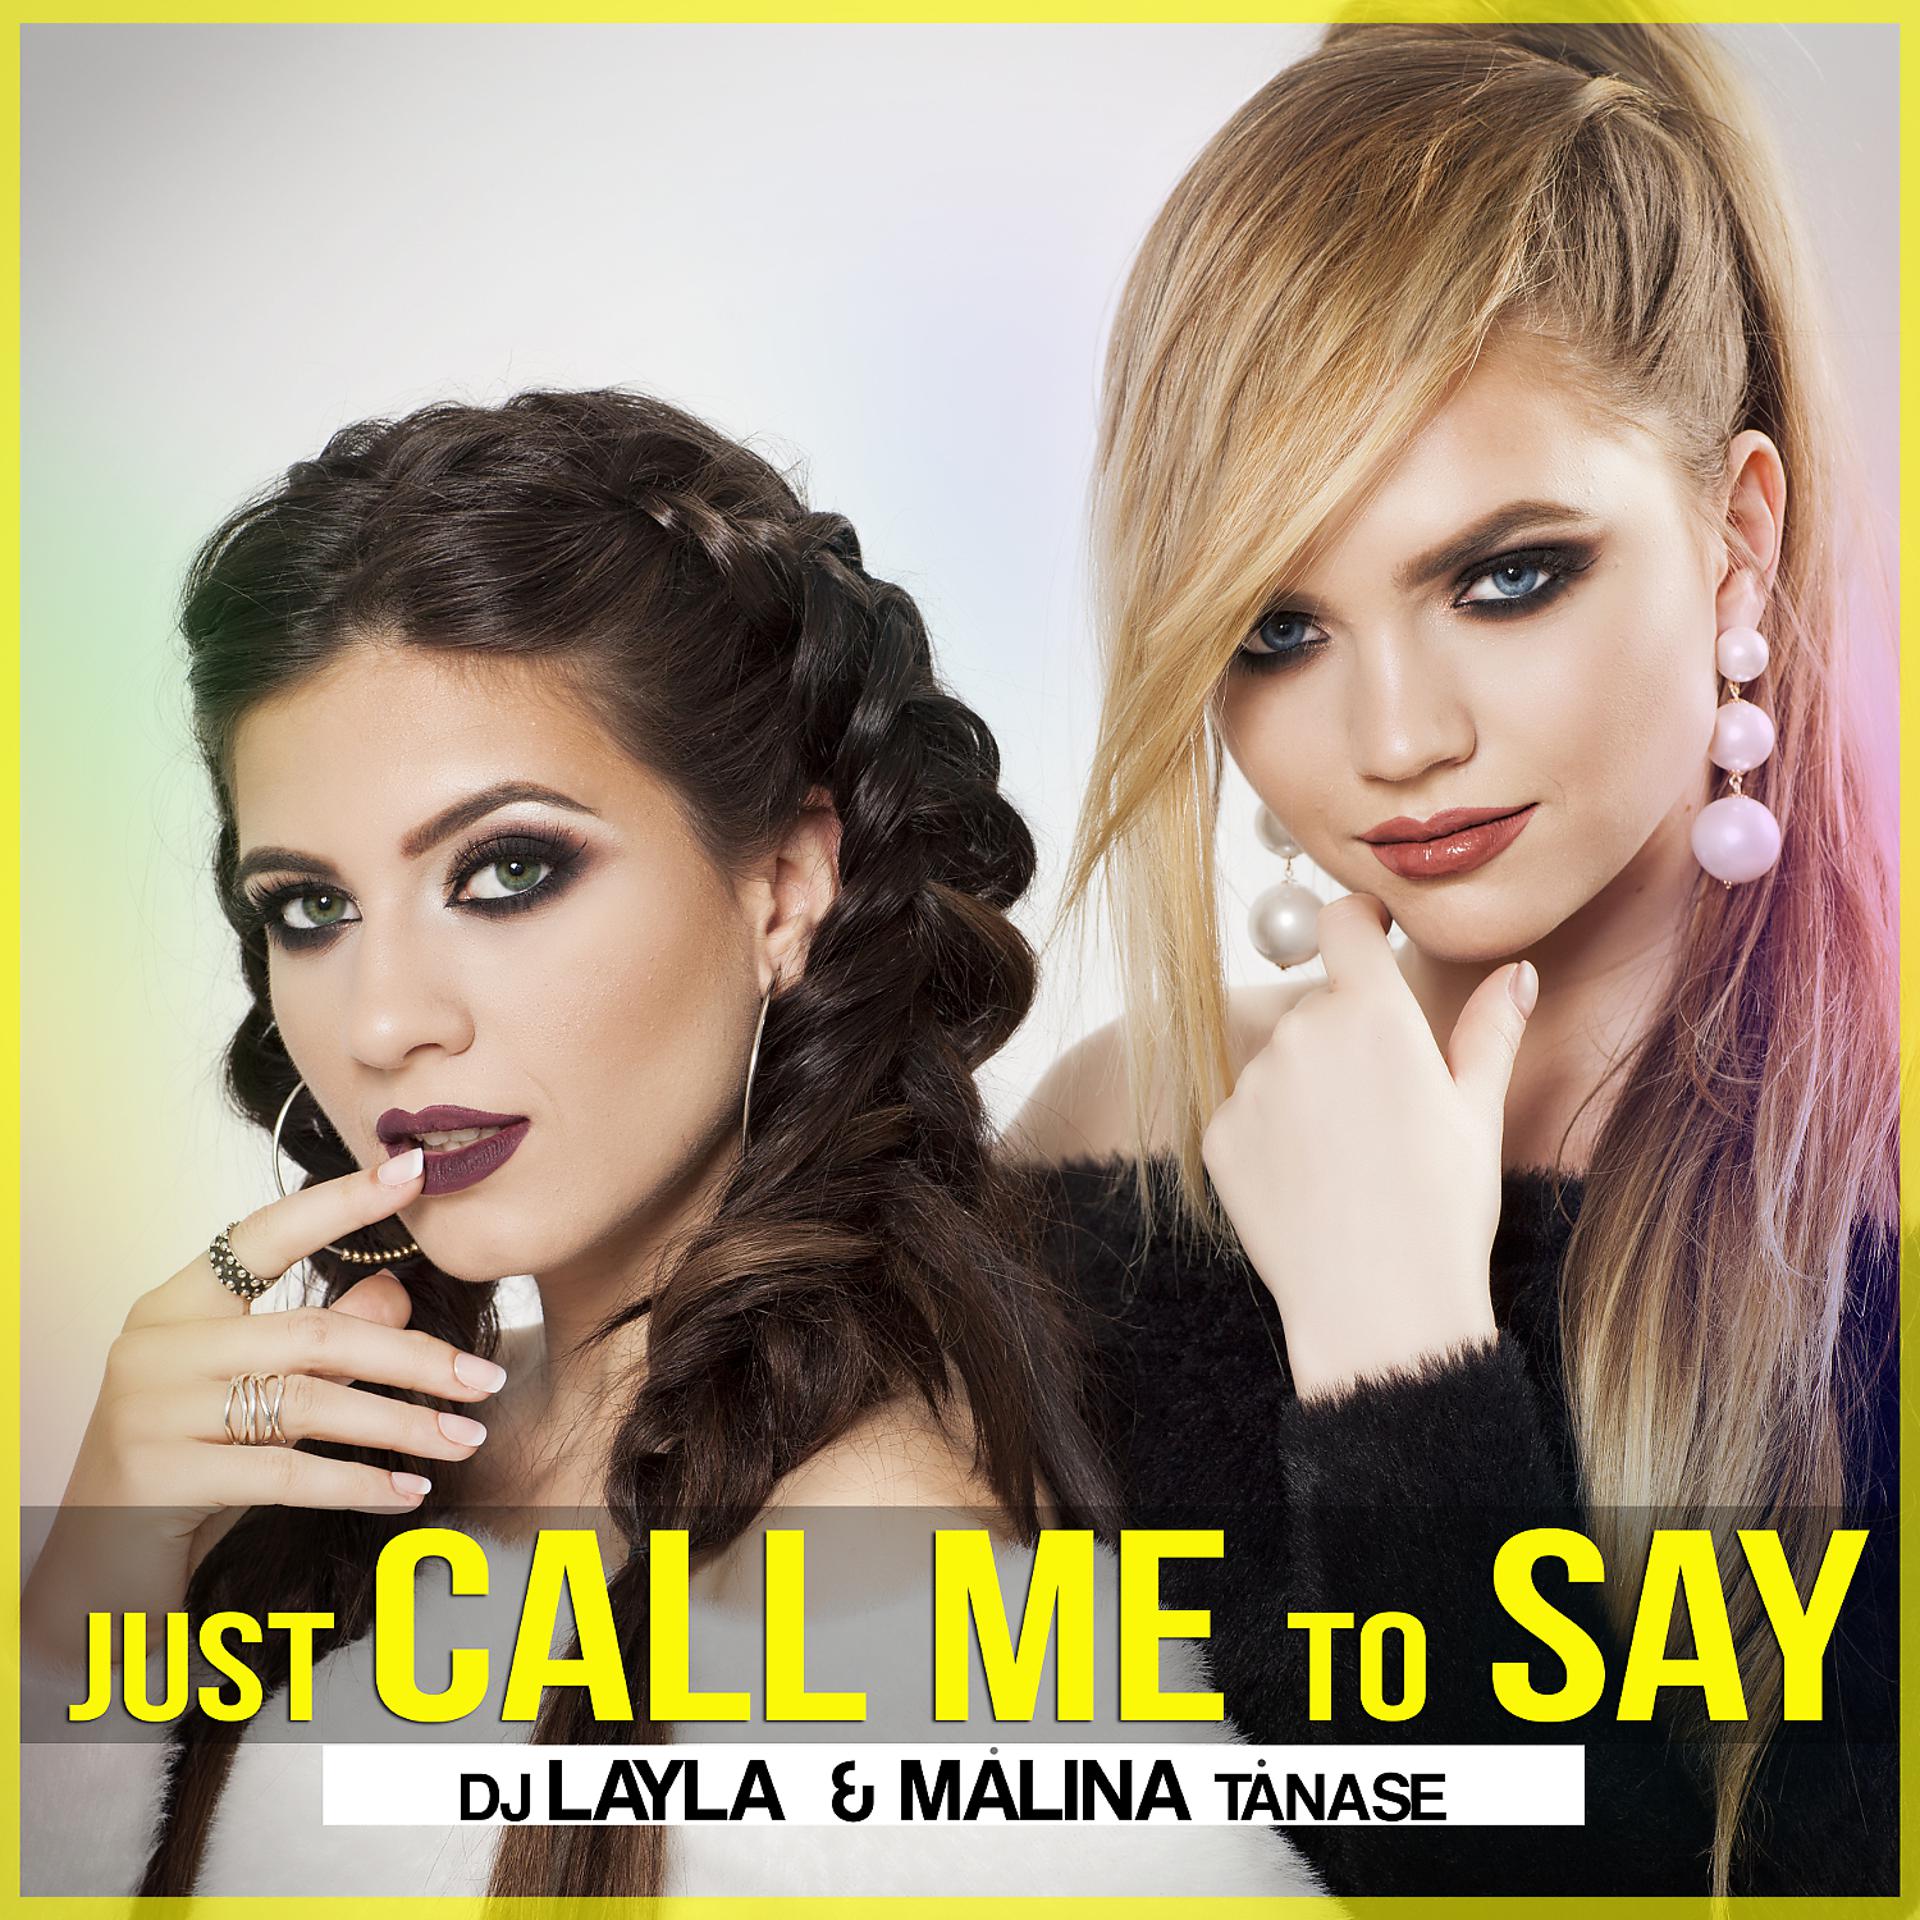 Постер к треку Dj Layla, Malina Tanase - Just Call Me To Say (feat. Malina Tanase)